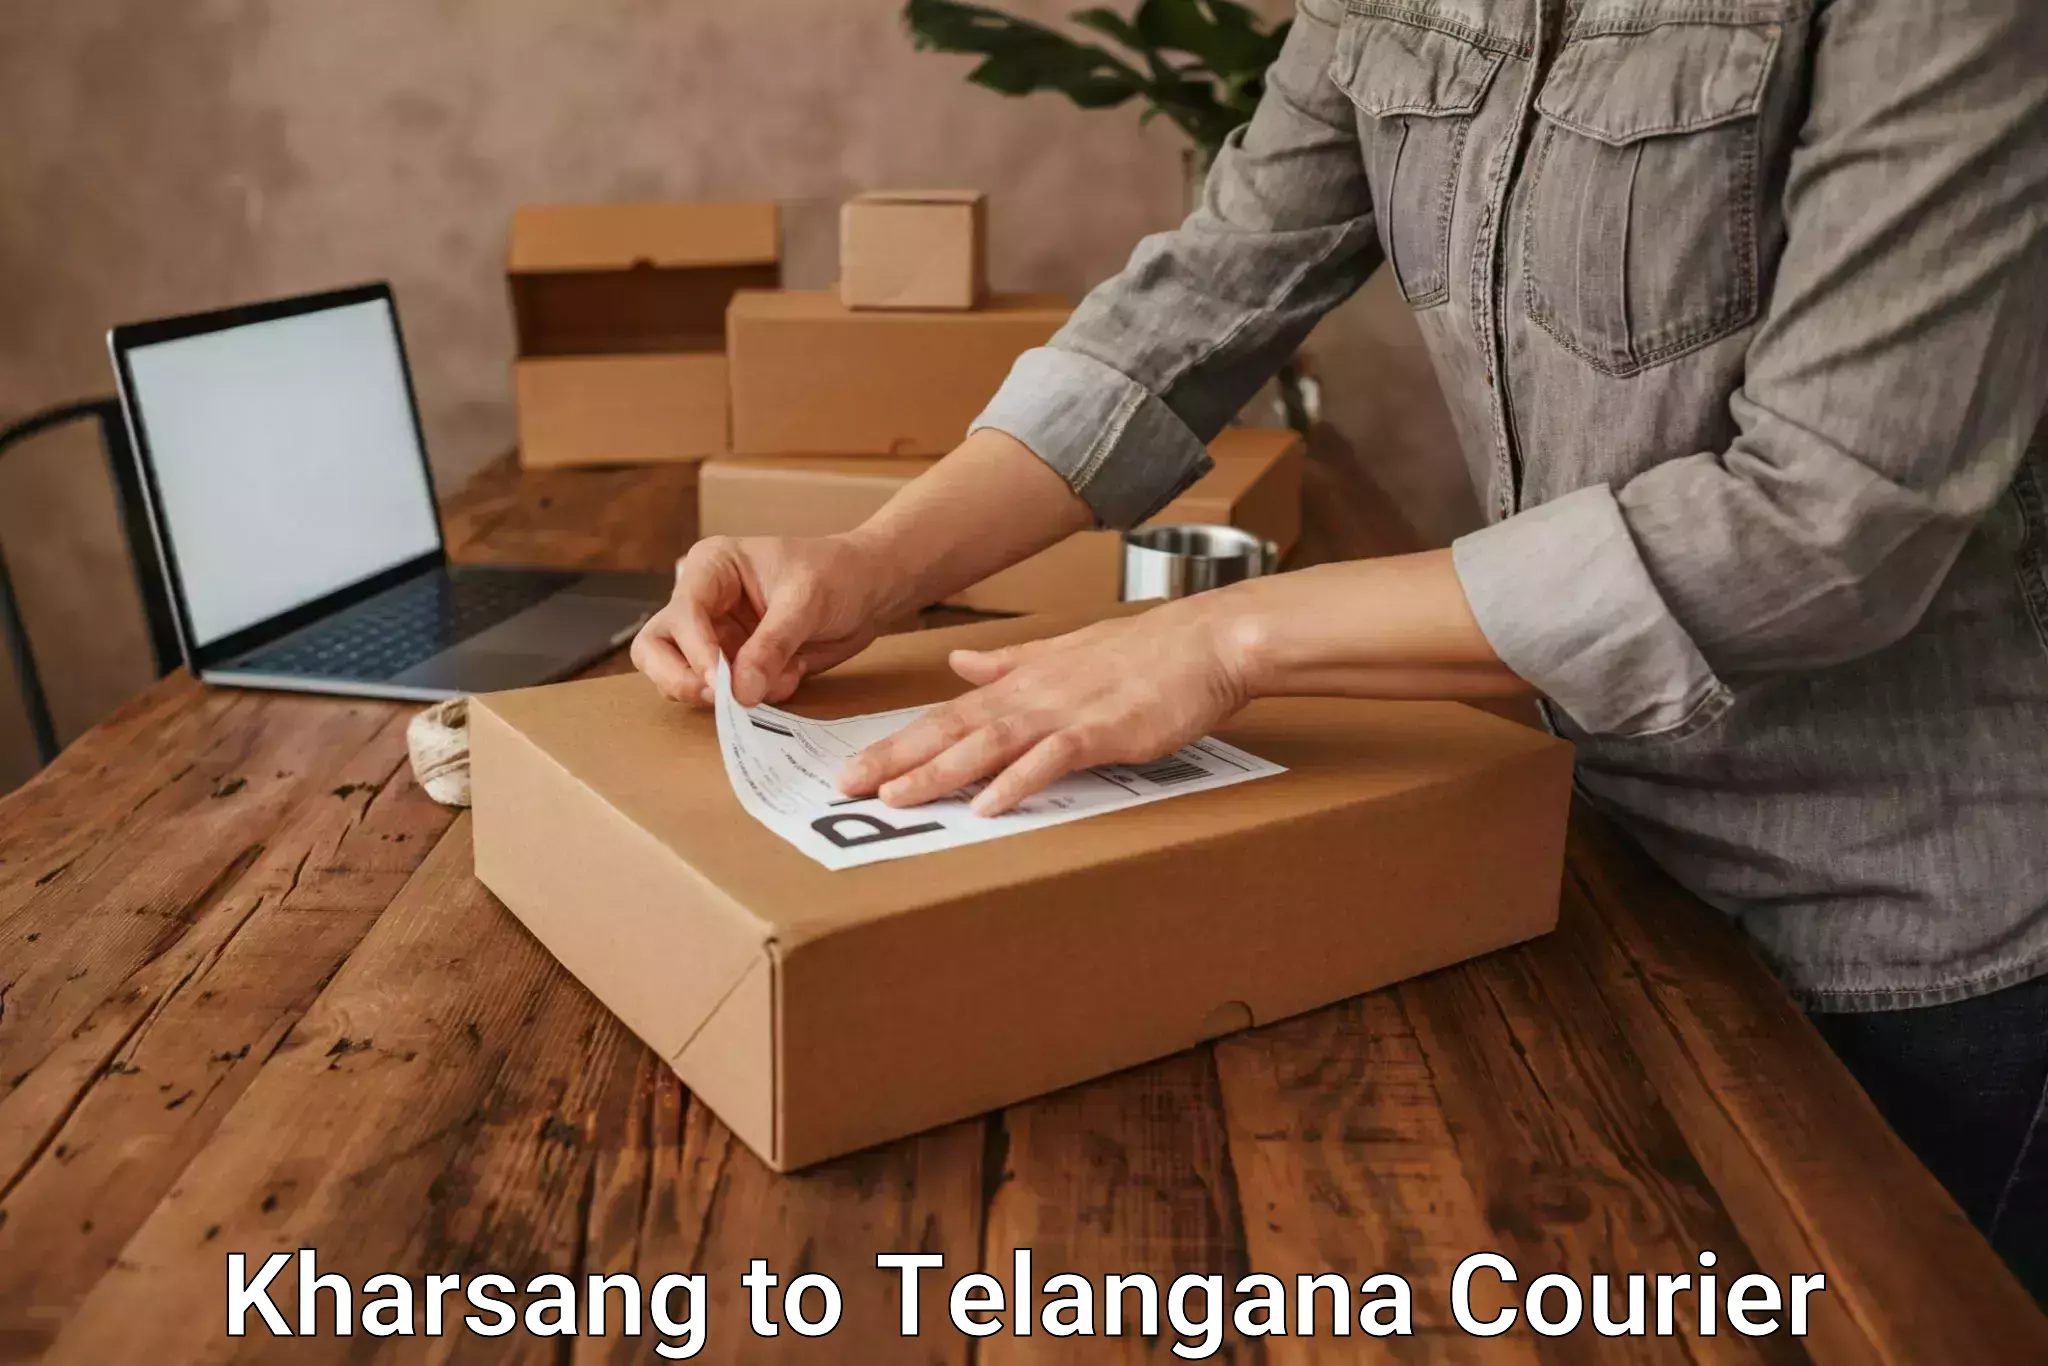 Digital courier platforms Kharsang to Rudrangi